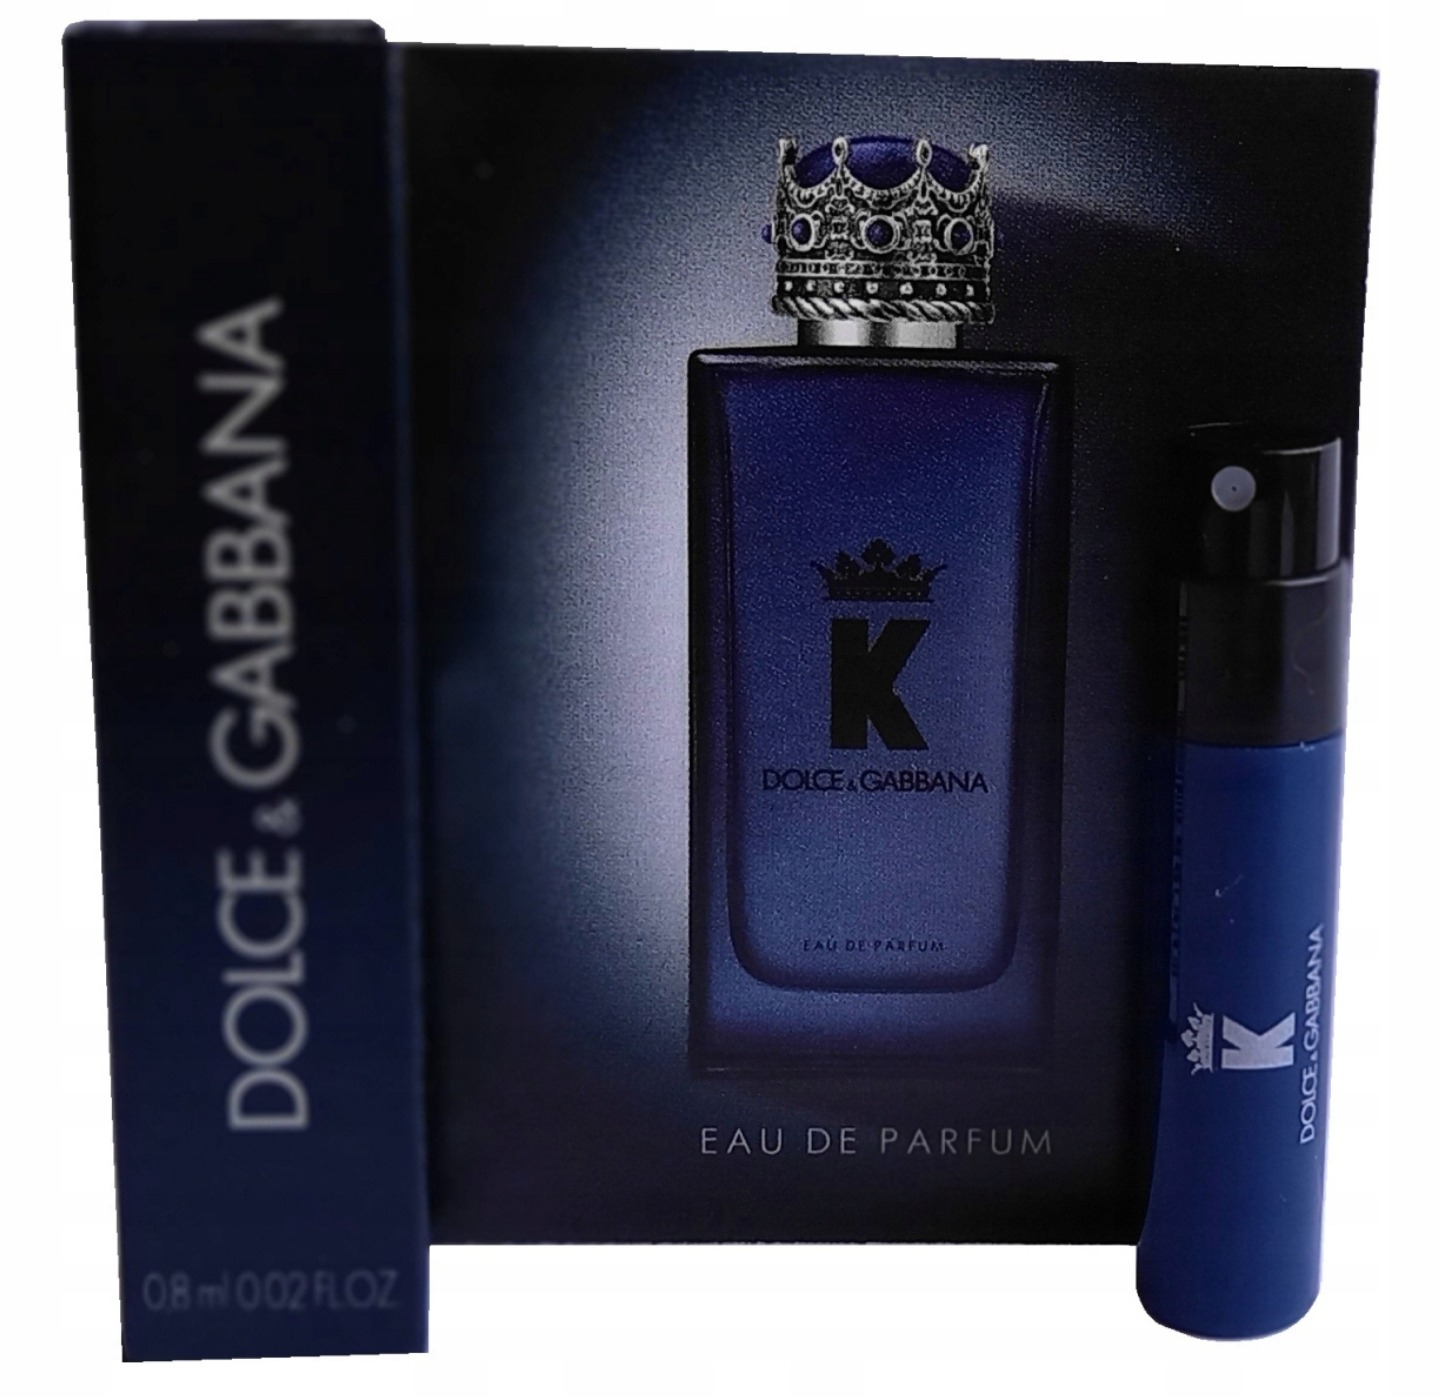 Dolce & Gabbana K edp 0,8ml spray